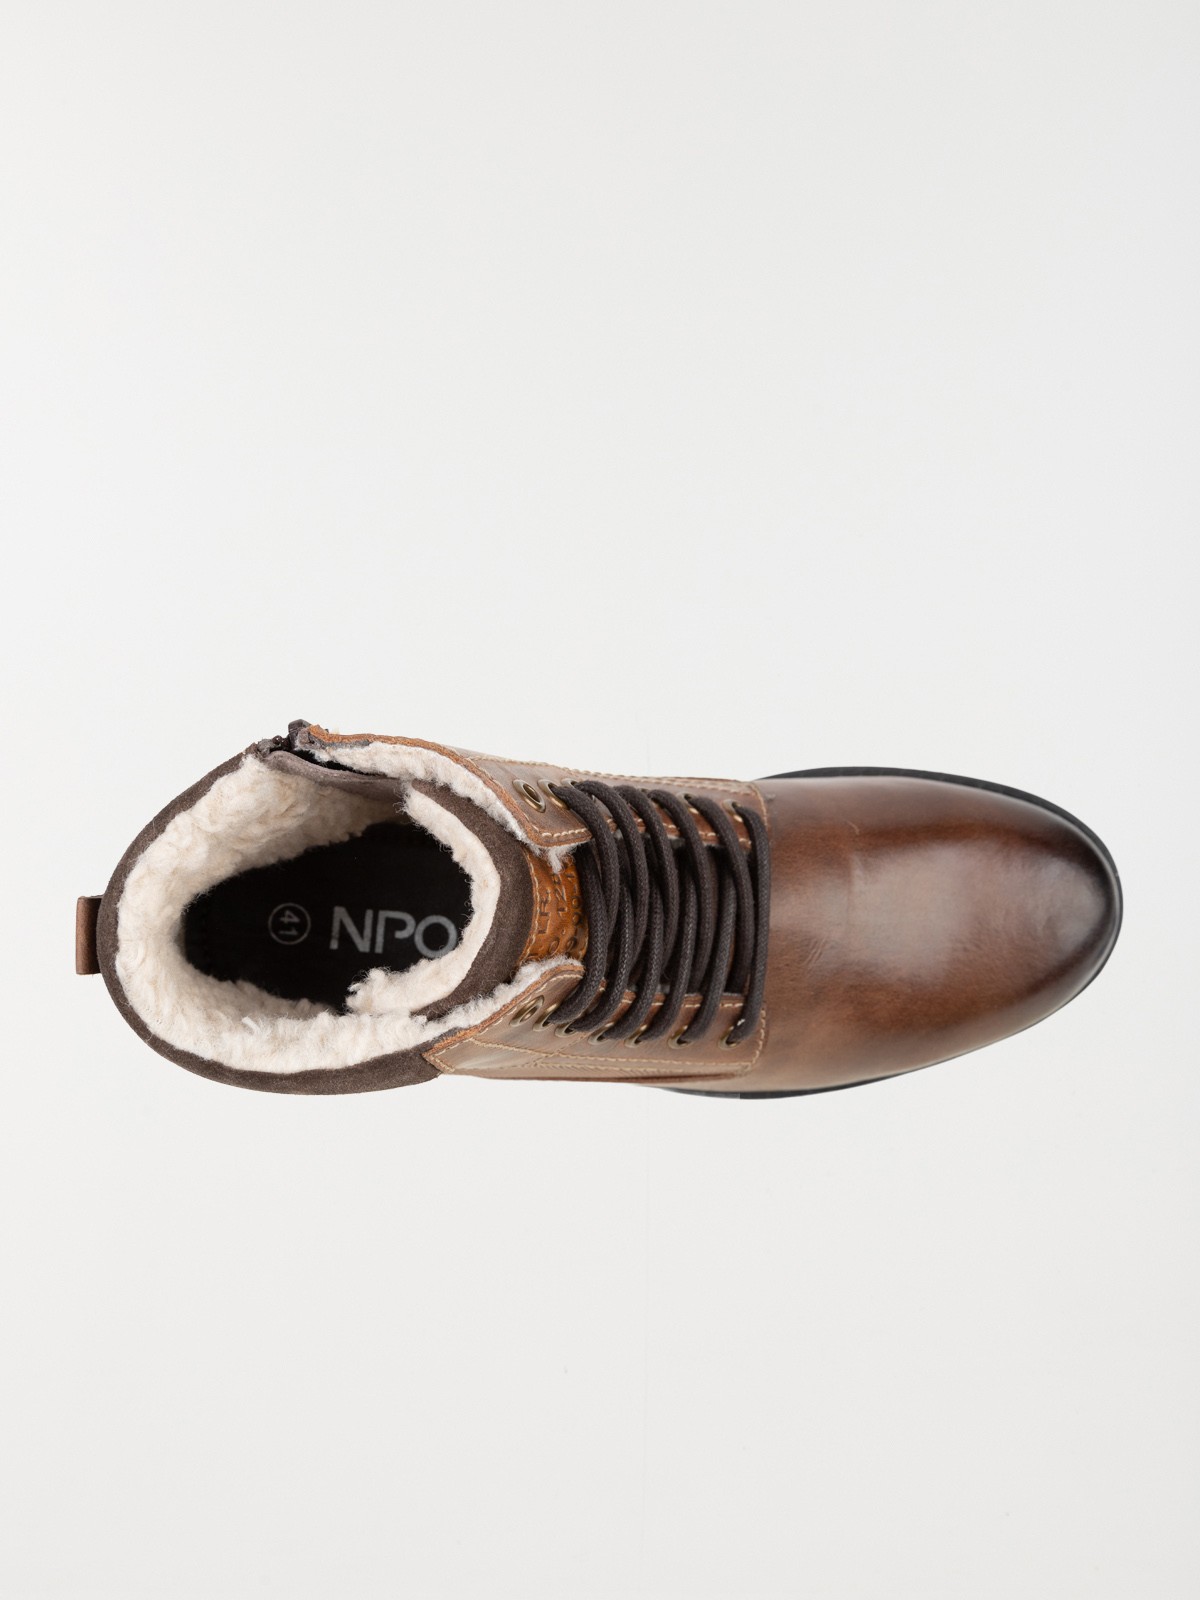 Chaussure montante marron homme (41-46) - DistriCenter